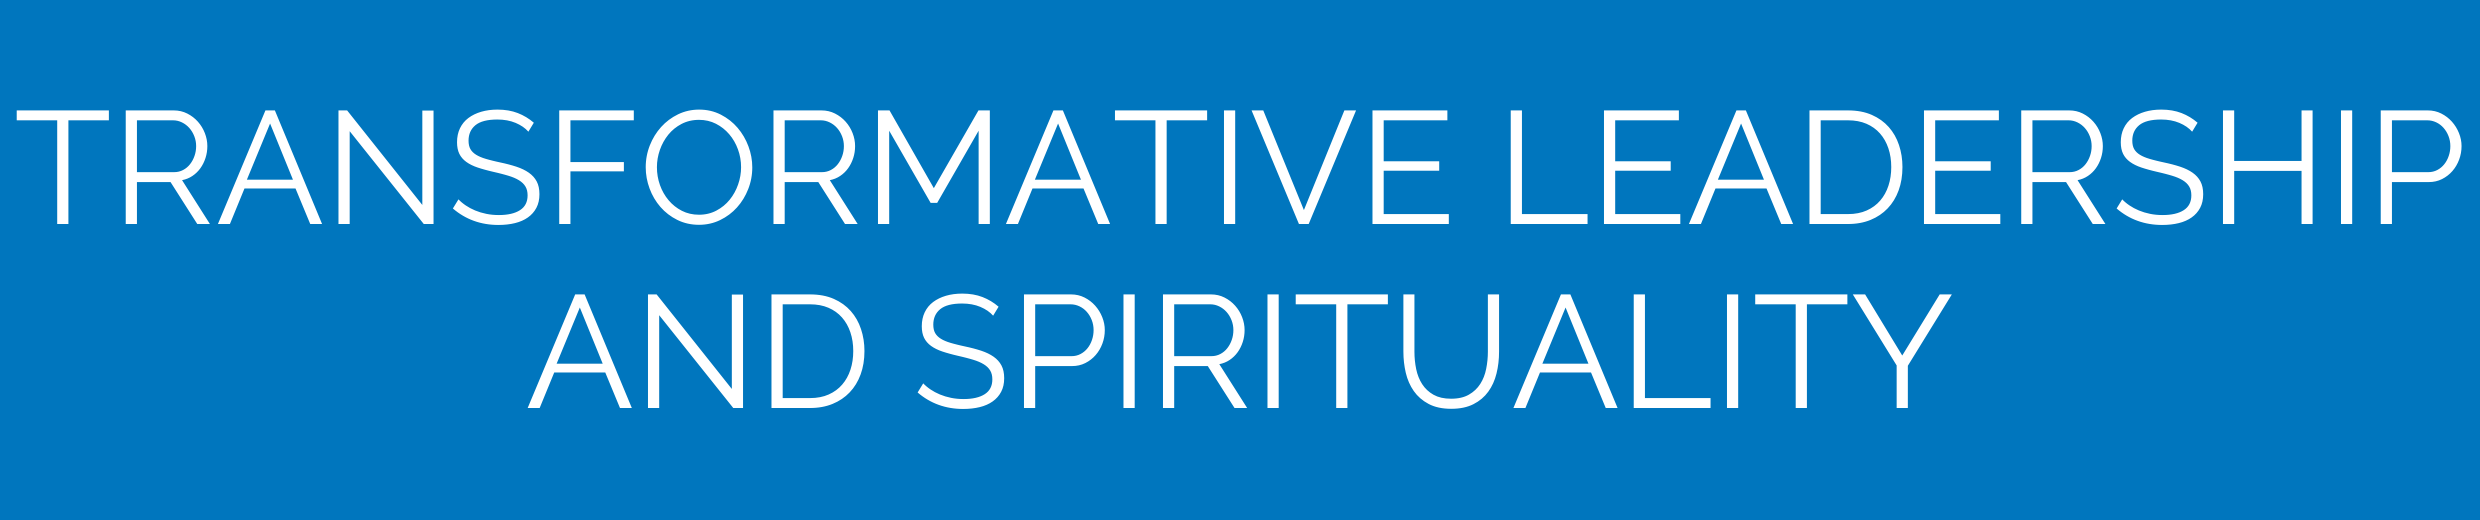 Transformative Leadership and Spirituality